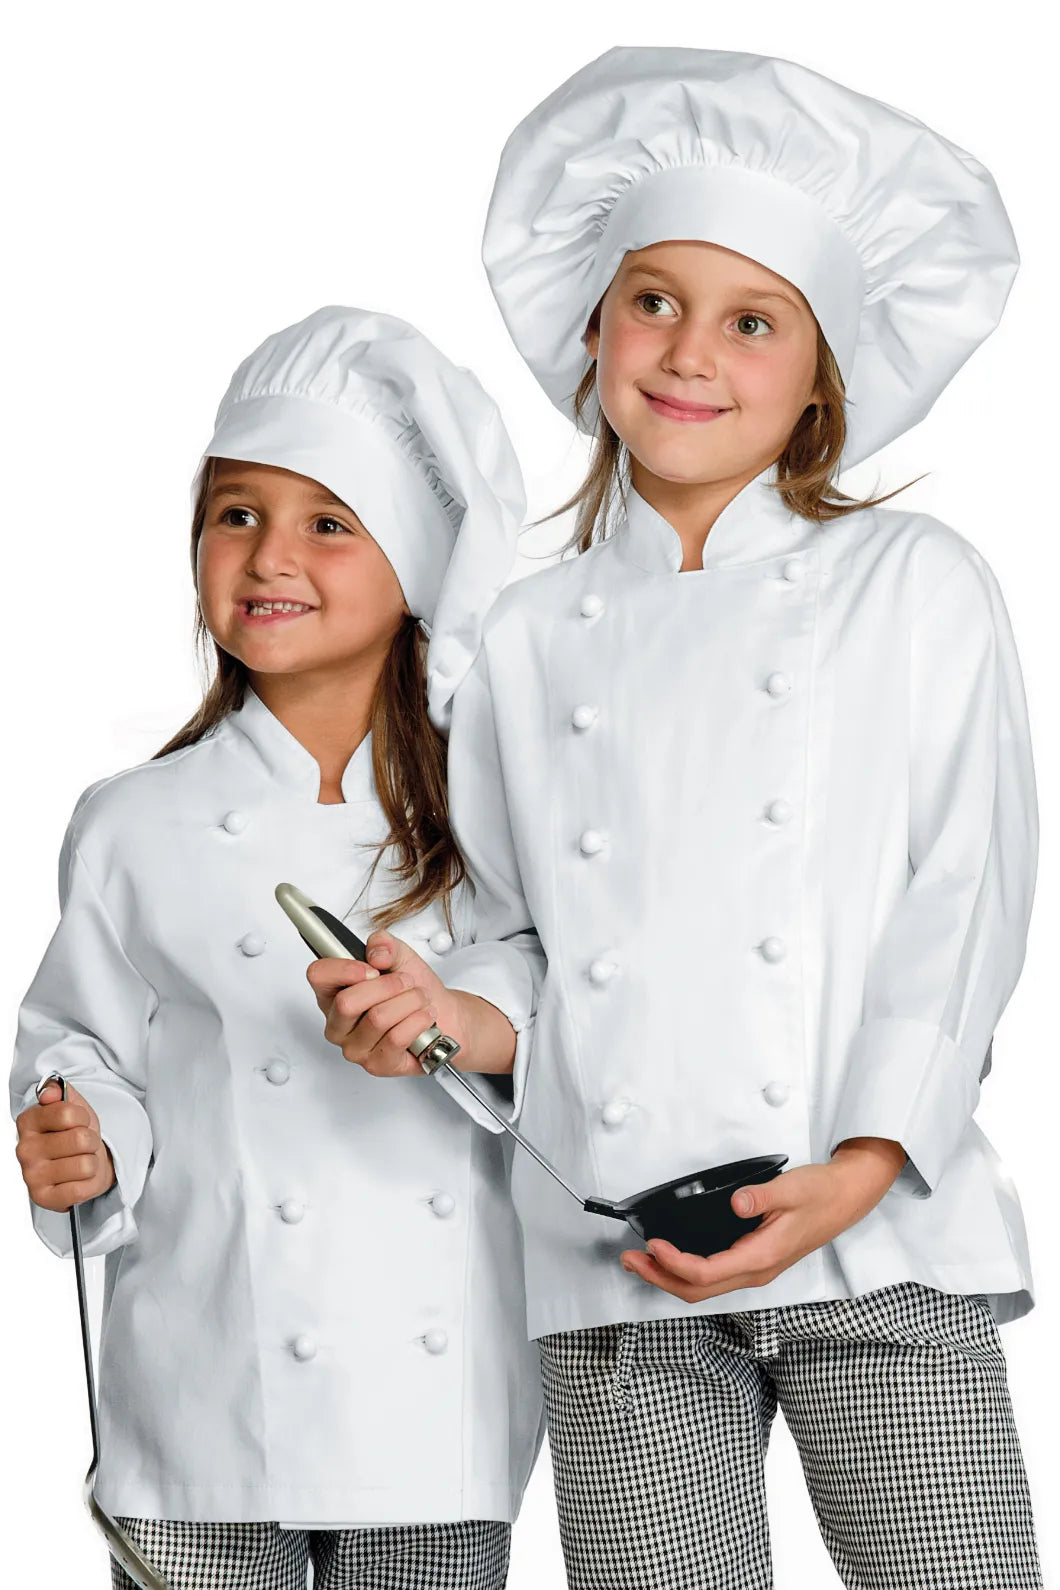 giacca-chef-per-bambini